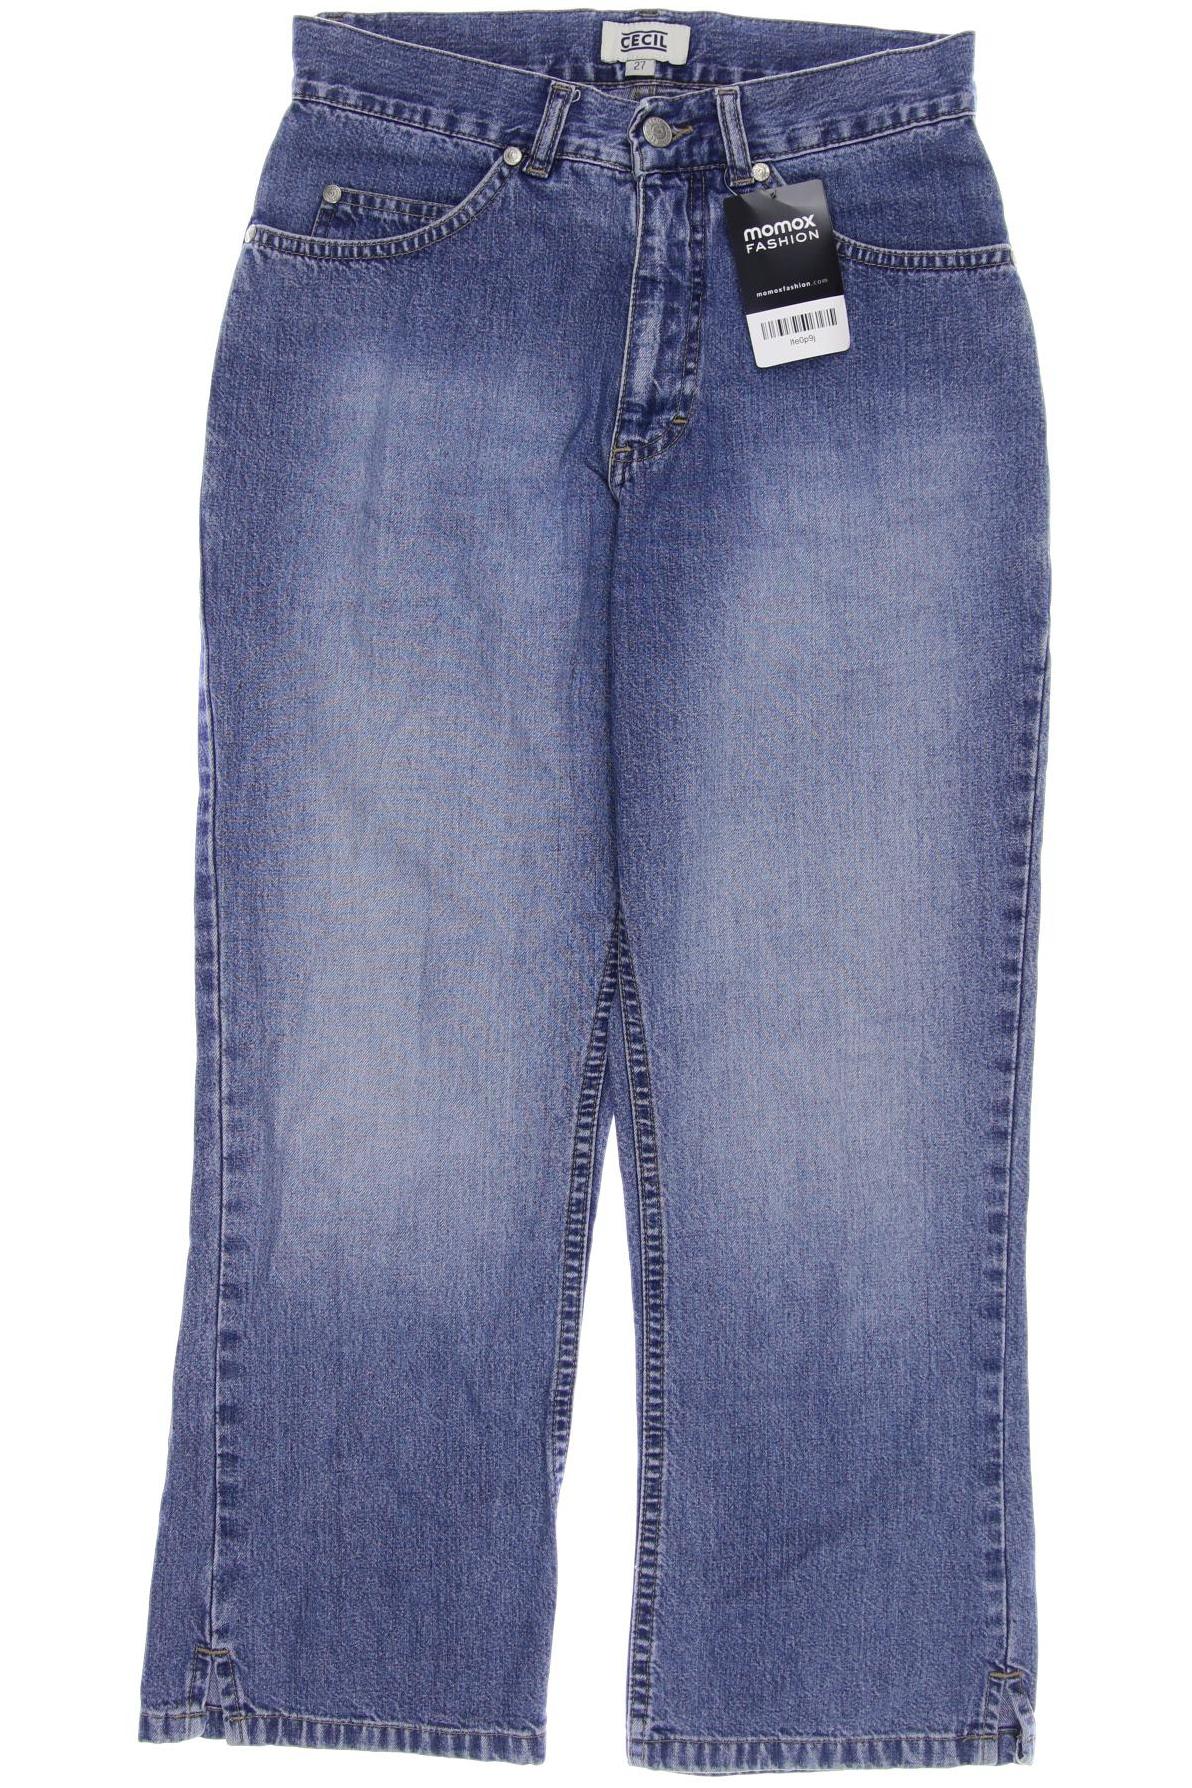 Cecil Damen Jeans, blau, Gr. 38 von cecil